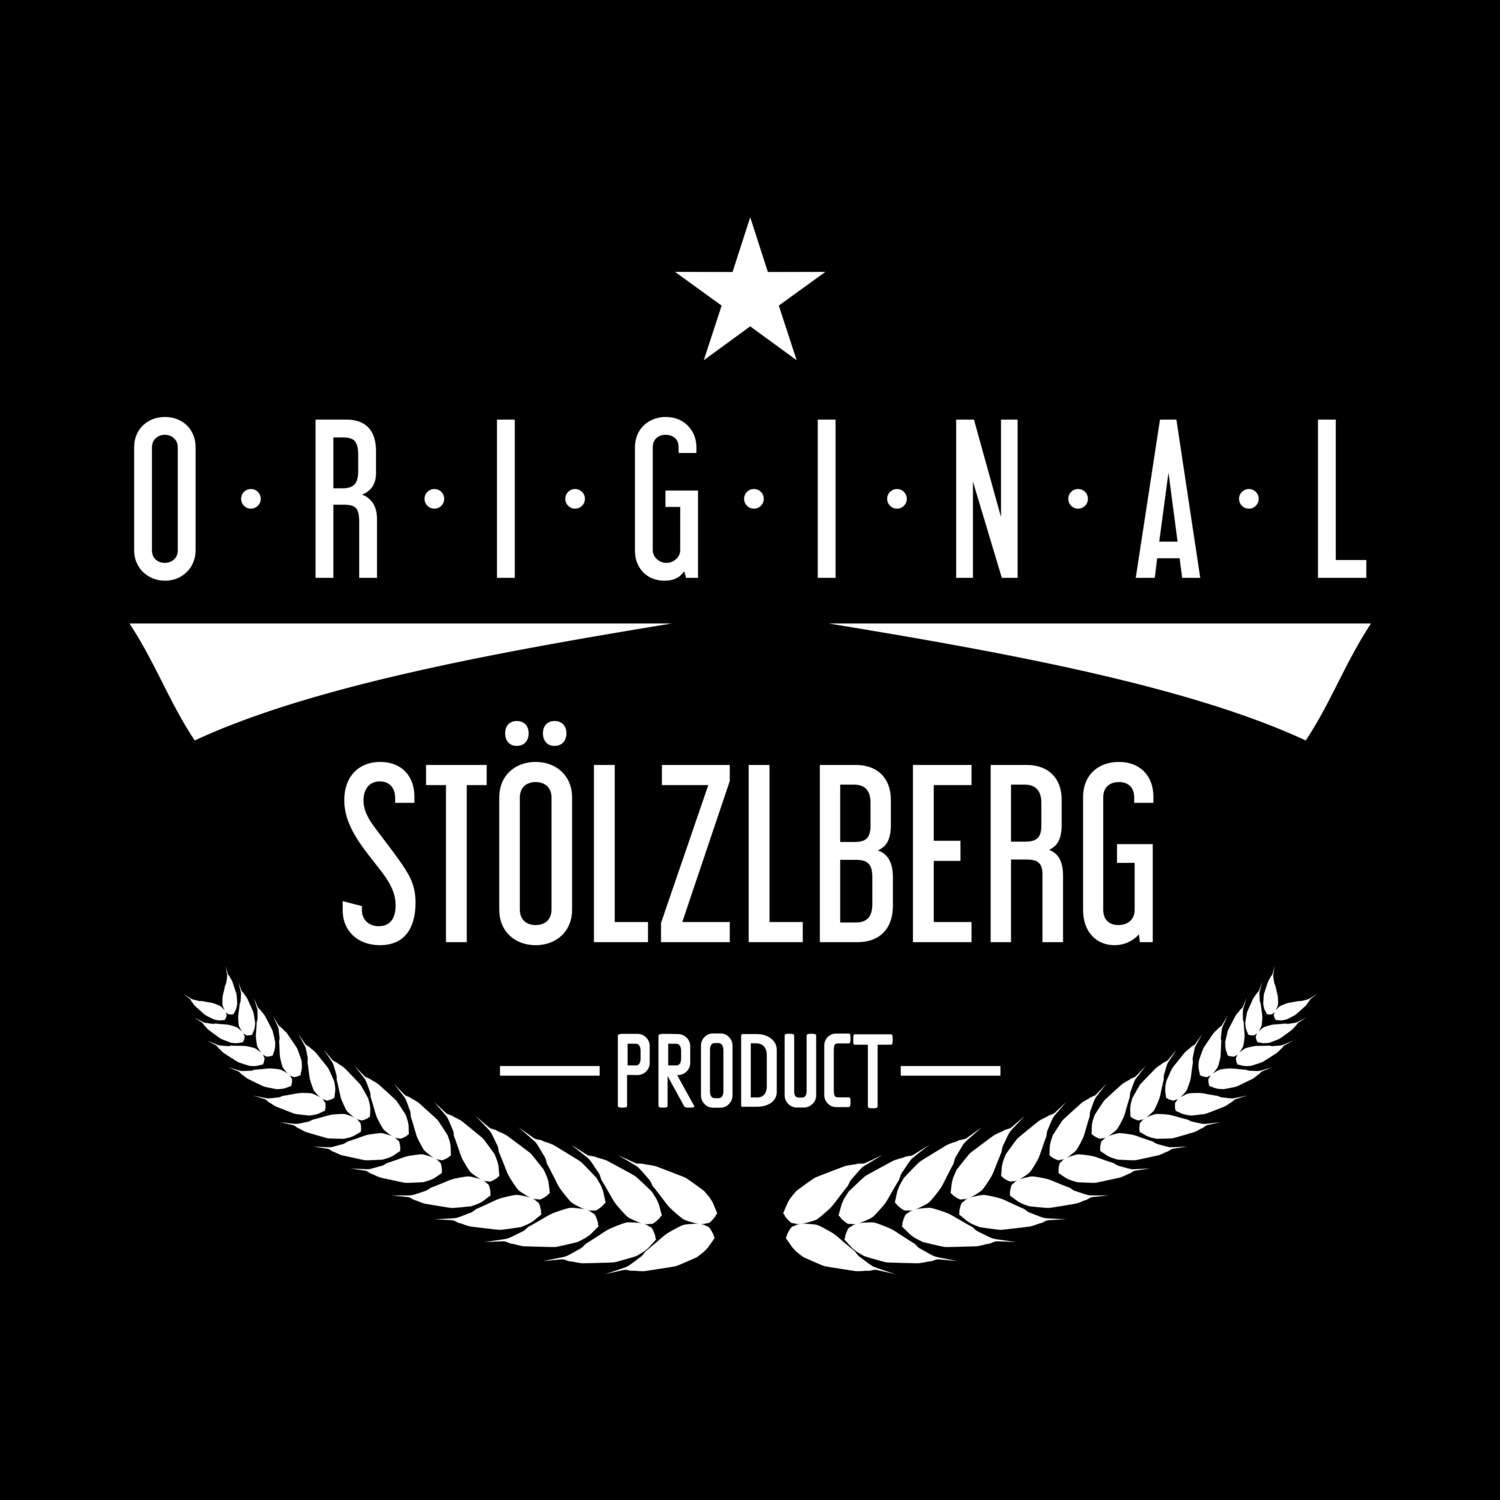 Stölzlberg T-Shirt »Original Product«